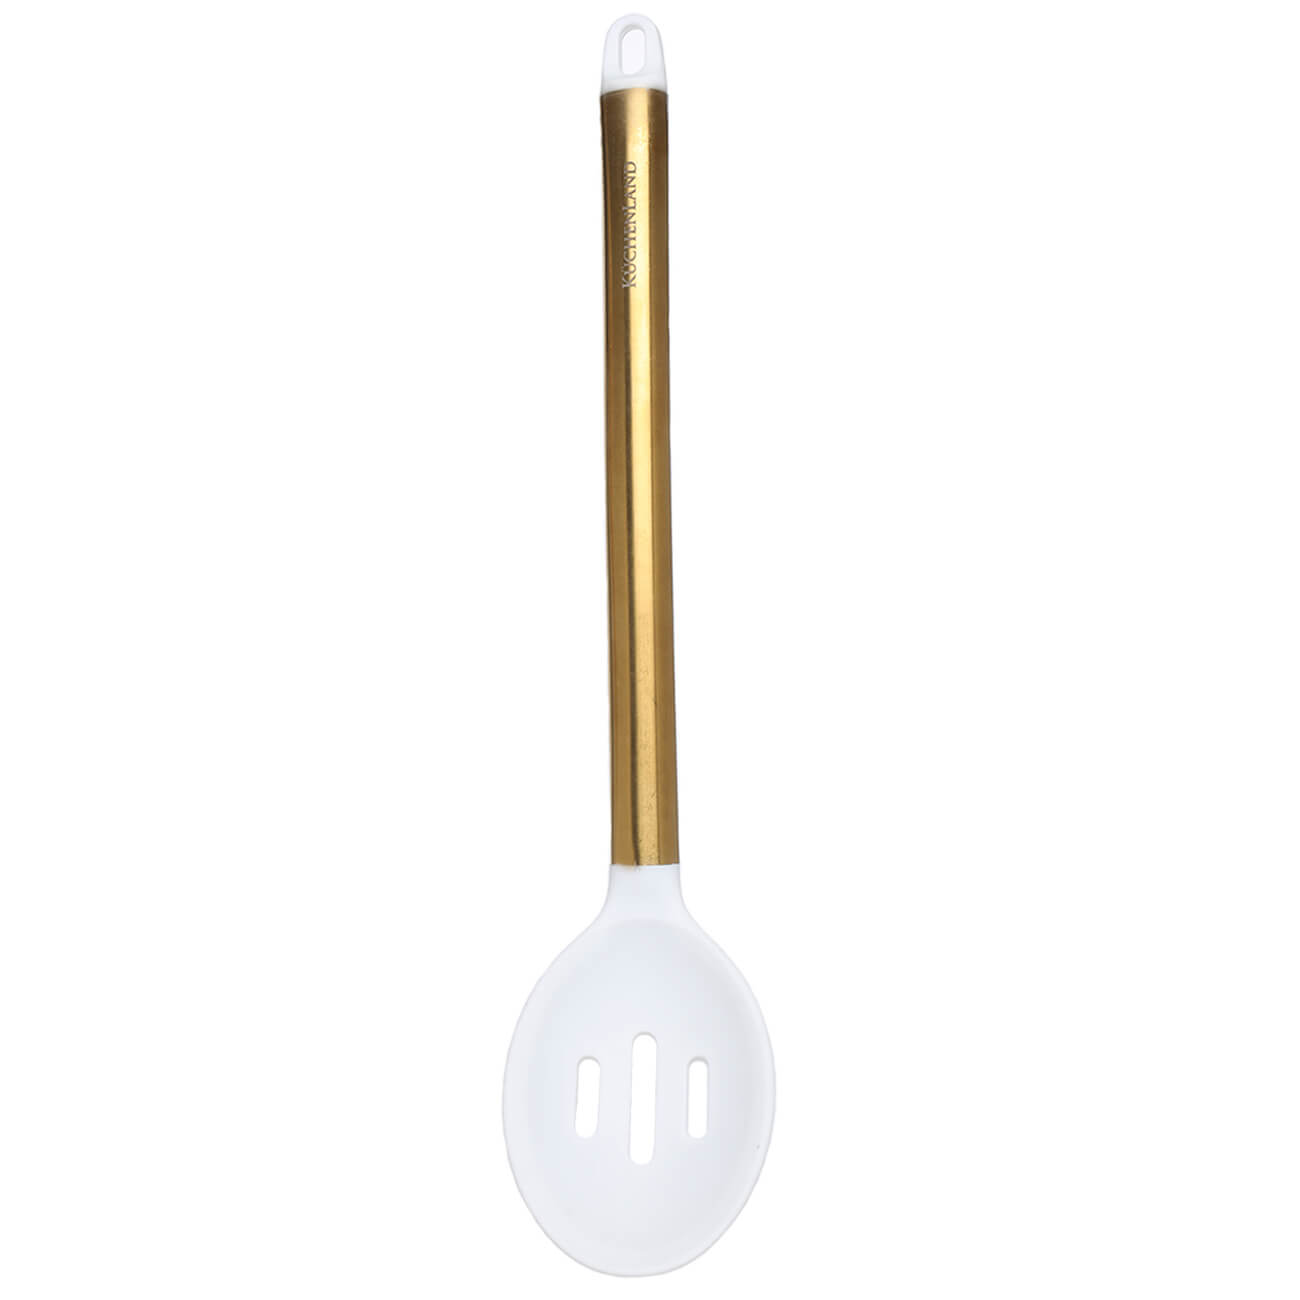 шумовка силикон навеска daniks саленто yw kt126 1 Шумовка, 33 см, сталь/силикон, белая, Bello gold